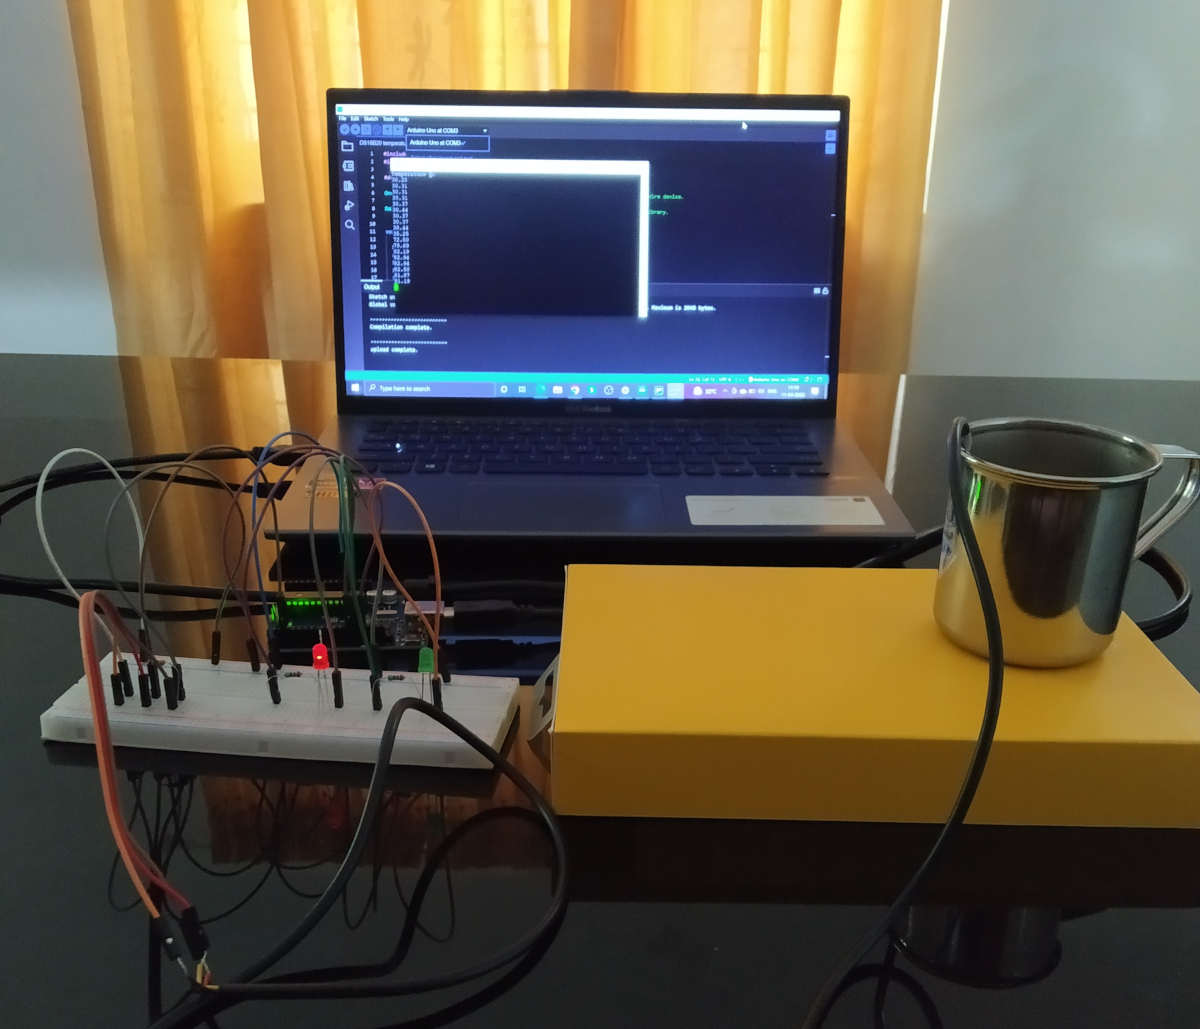 Experimental setup for arduino based temperature monitoring 